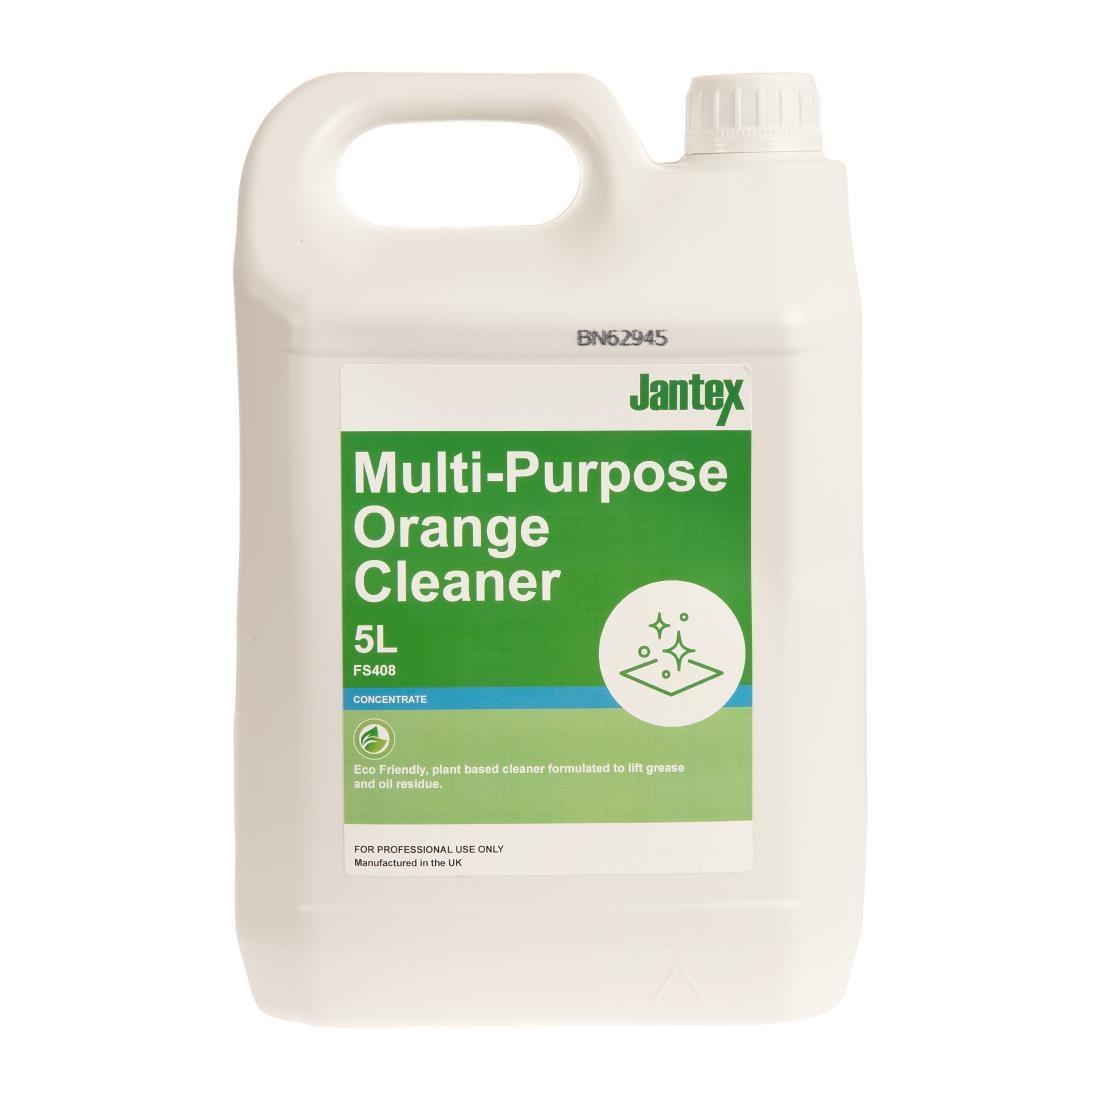 Jantex Green Orange Multipurpose Cleaner Concentrate 5Ltr - FS408  - 1